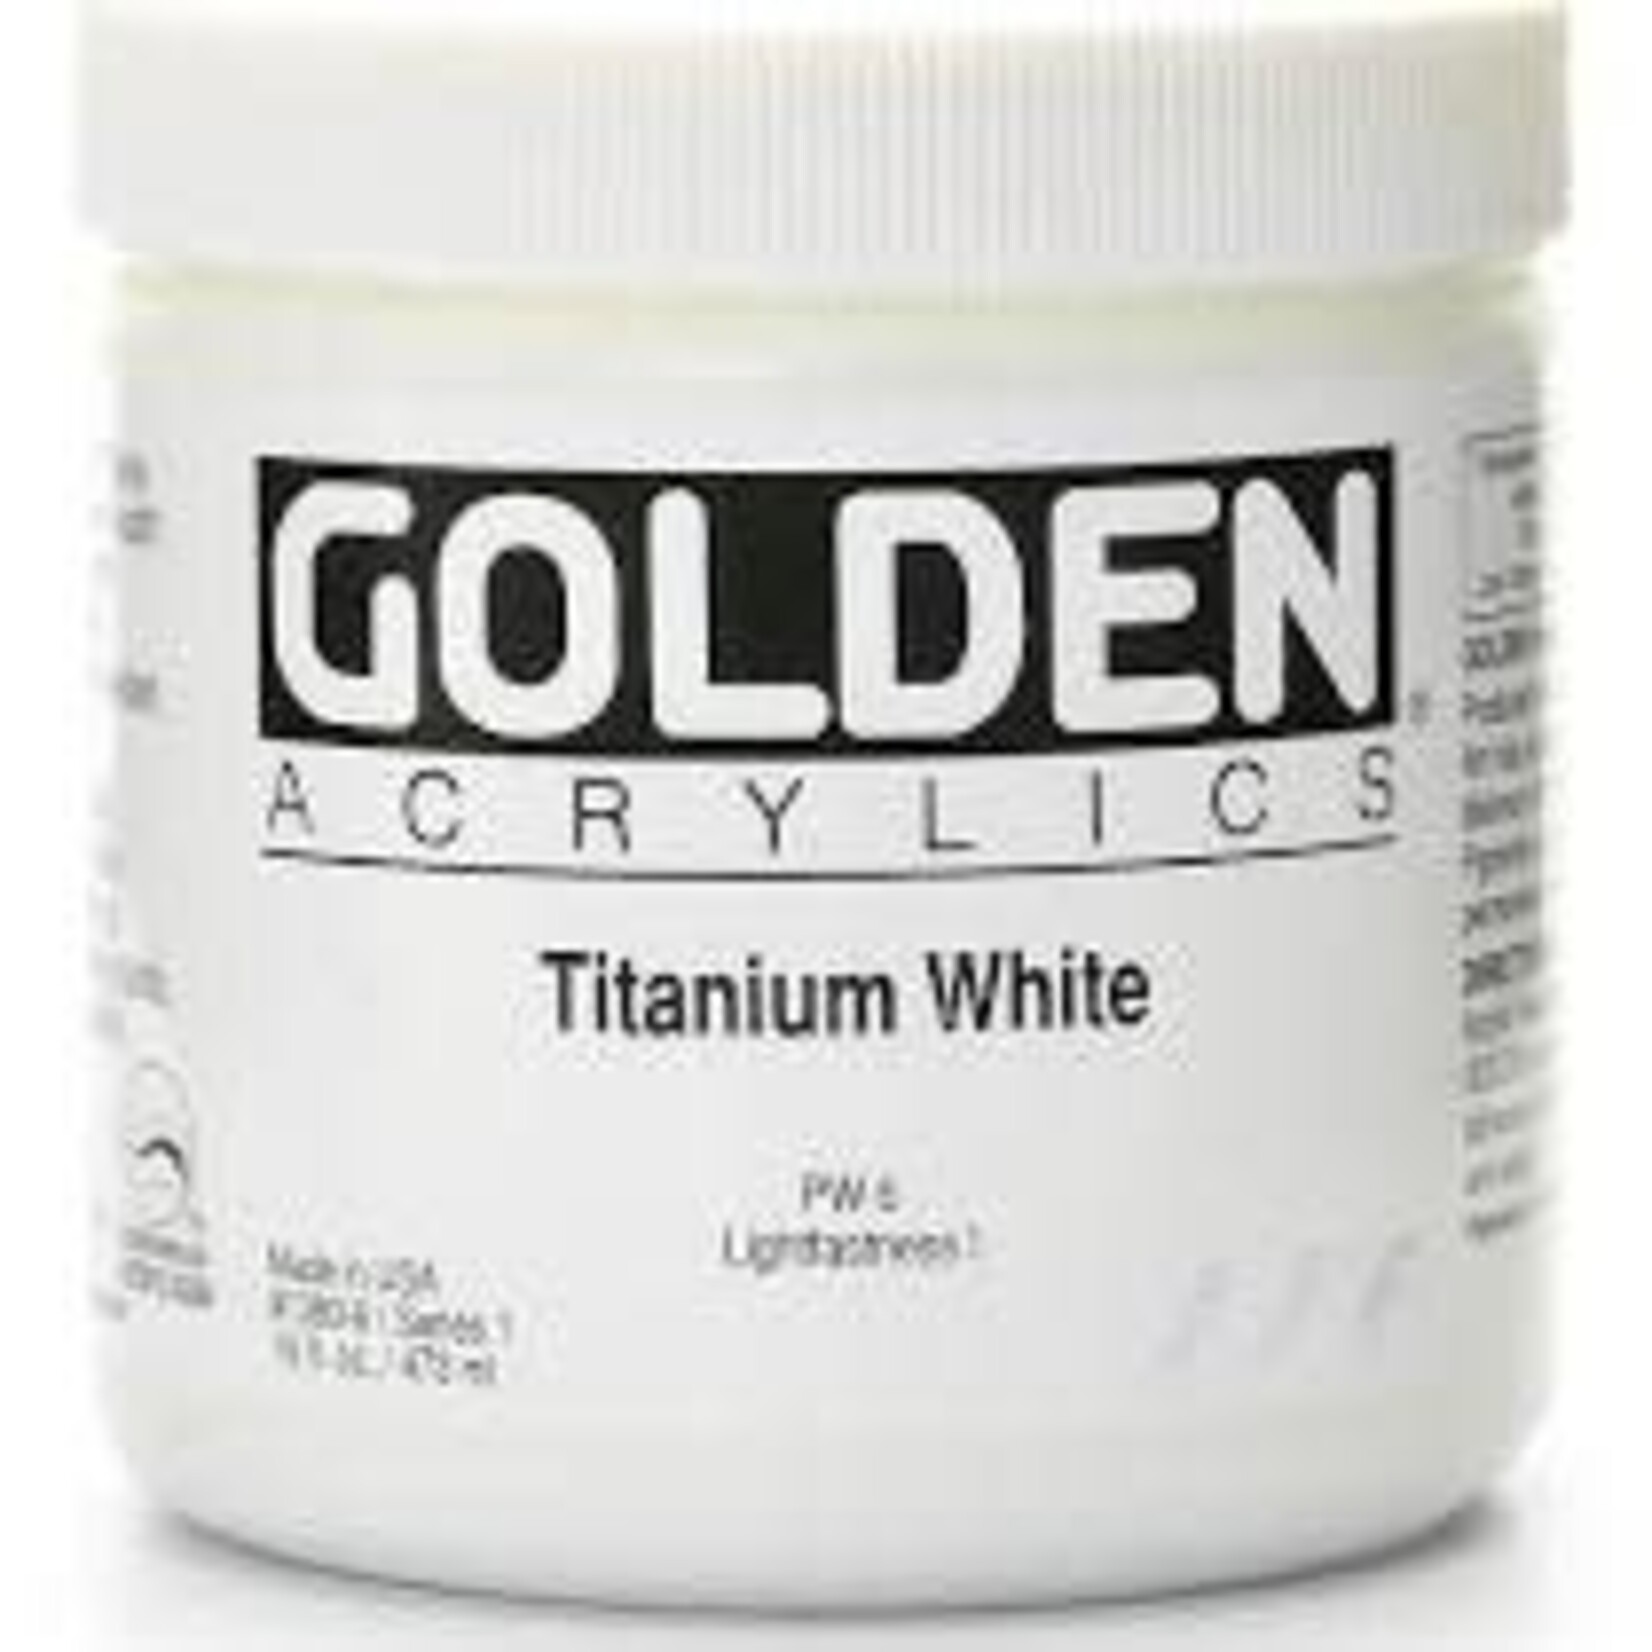 Golden Hb Titanium White Jar- 16 oz